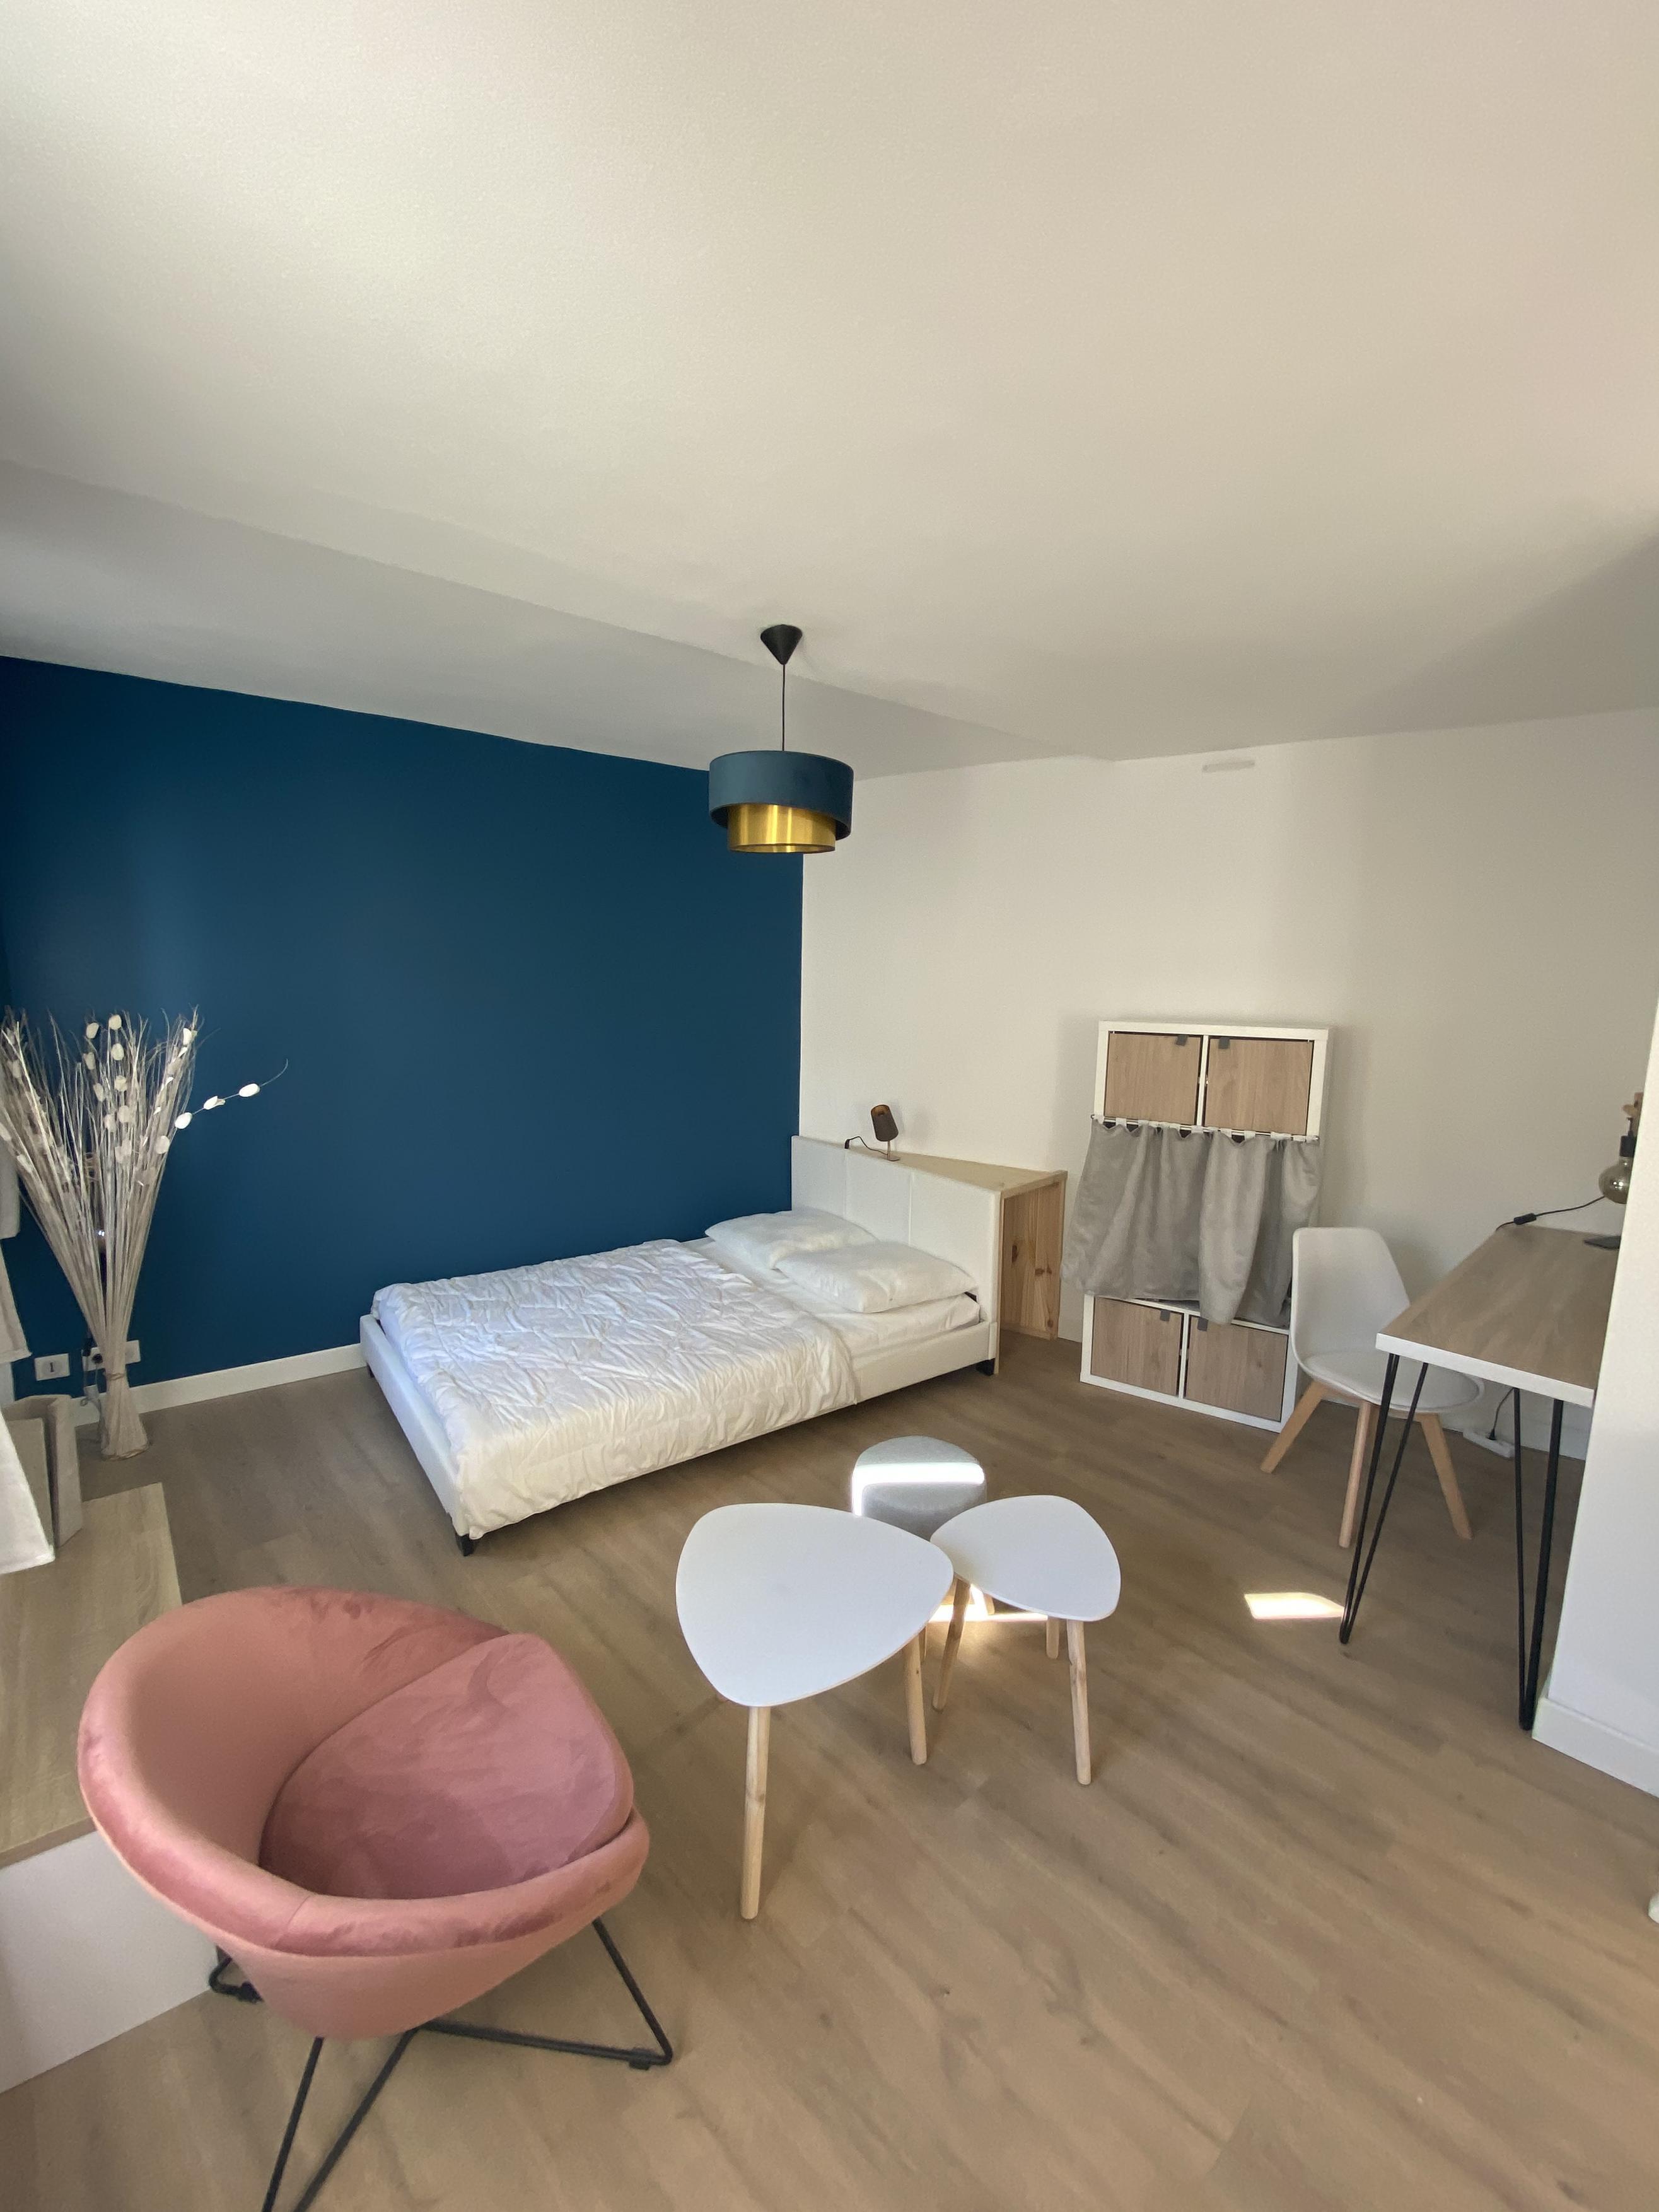 Appartement a louer herblay - 1 pièce(s) - 25 m2 - Surfyn